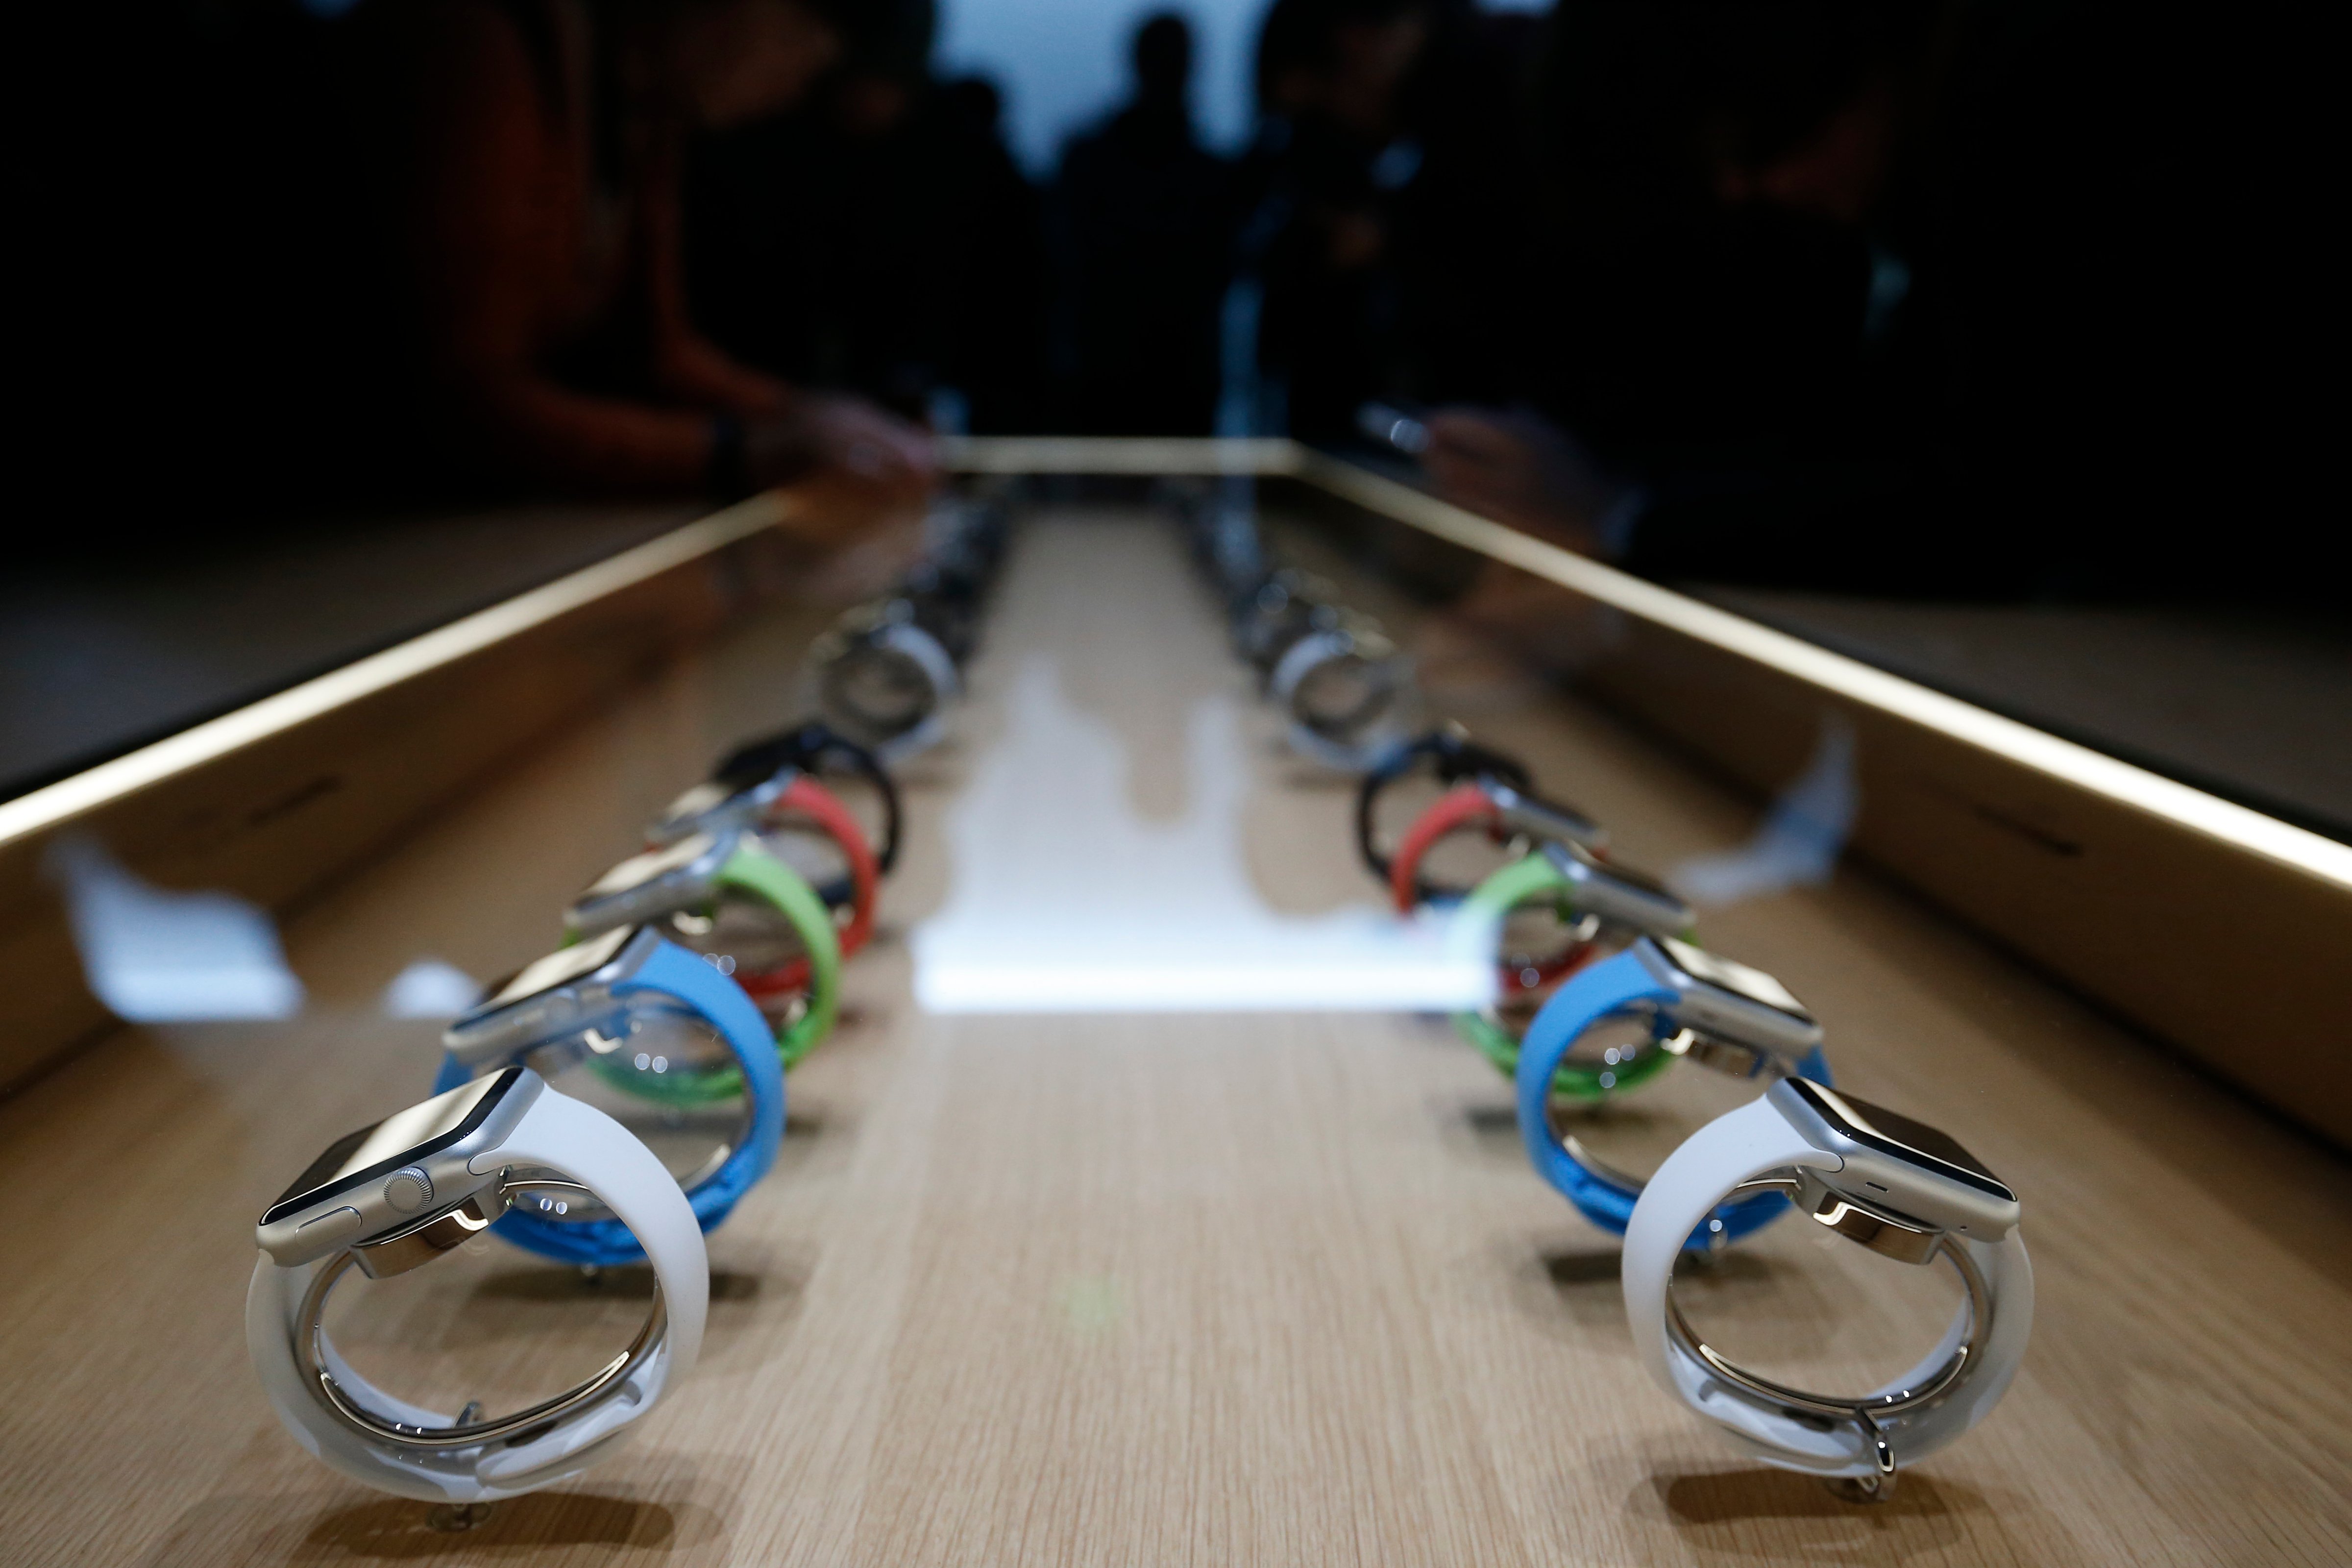 Apple Debuts New Watch